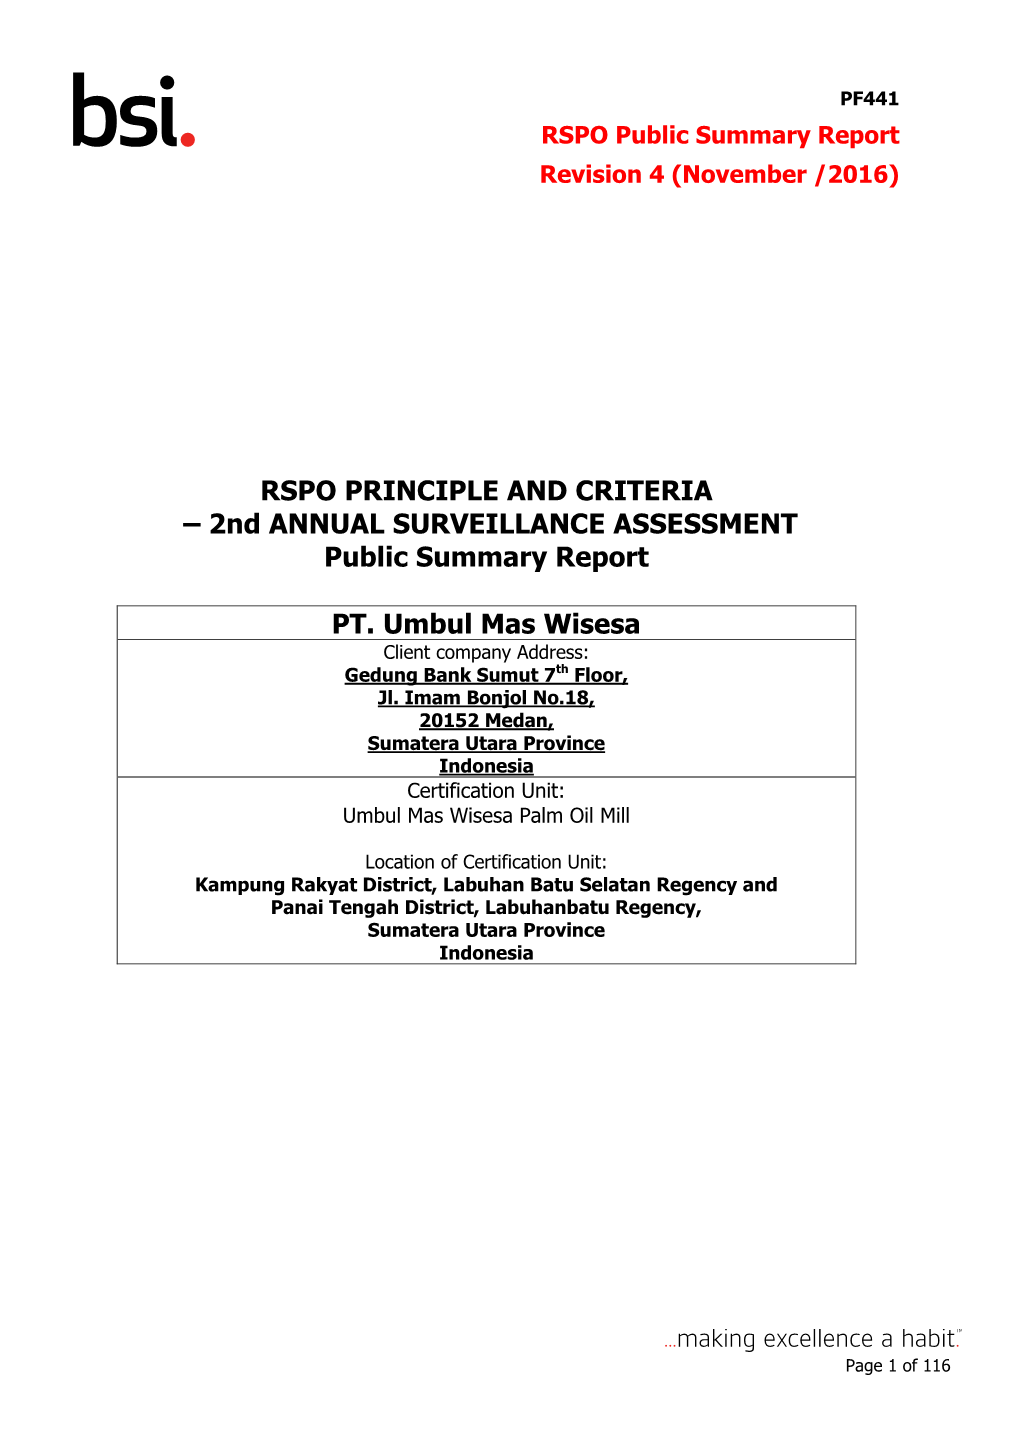 RSPO Public Summary Report Revision 4 (November /2016)